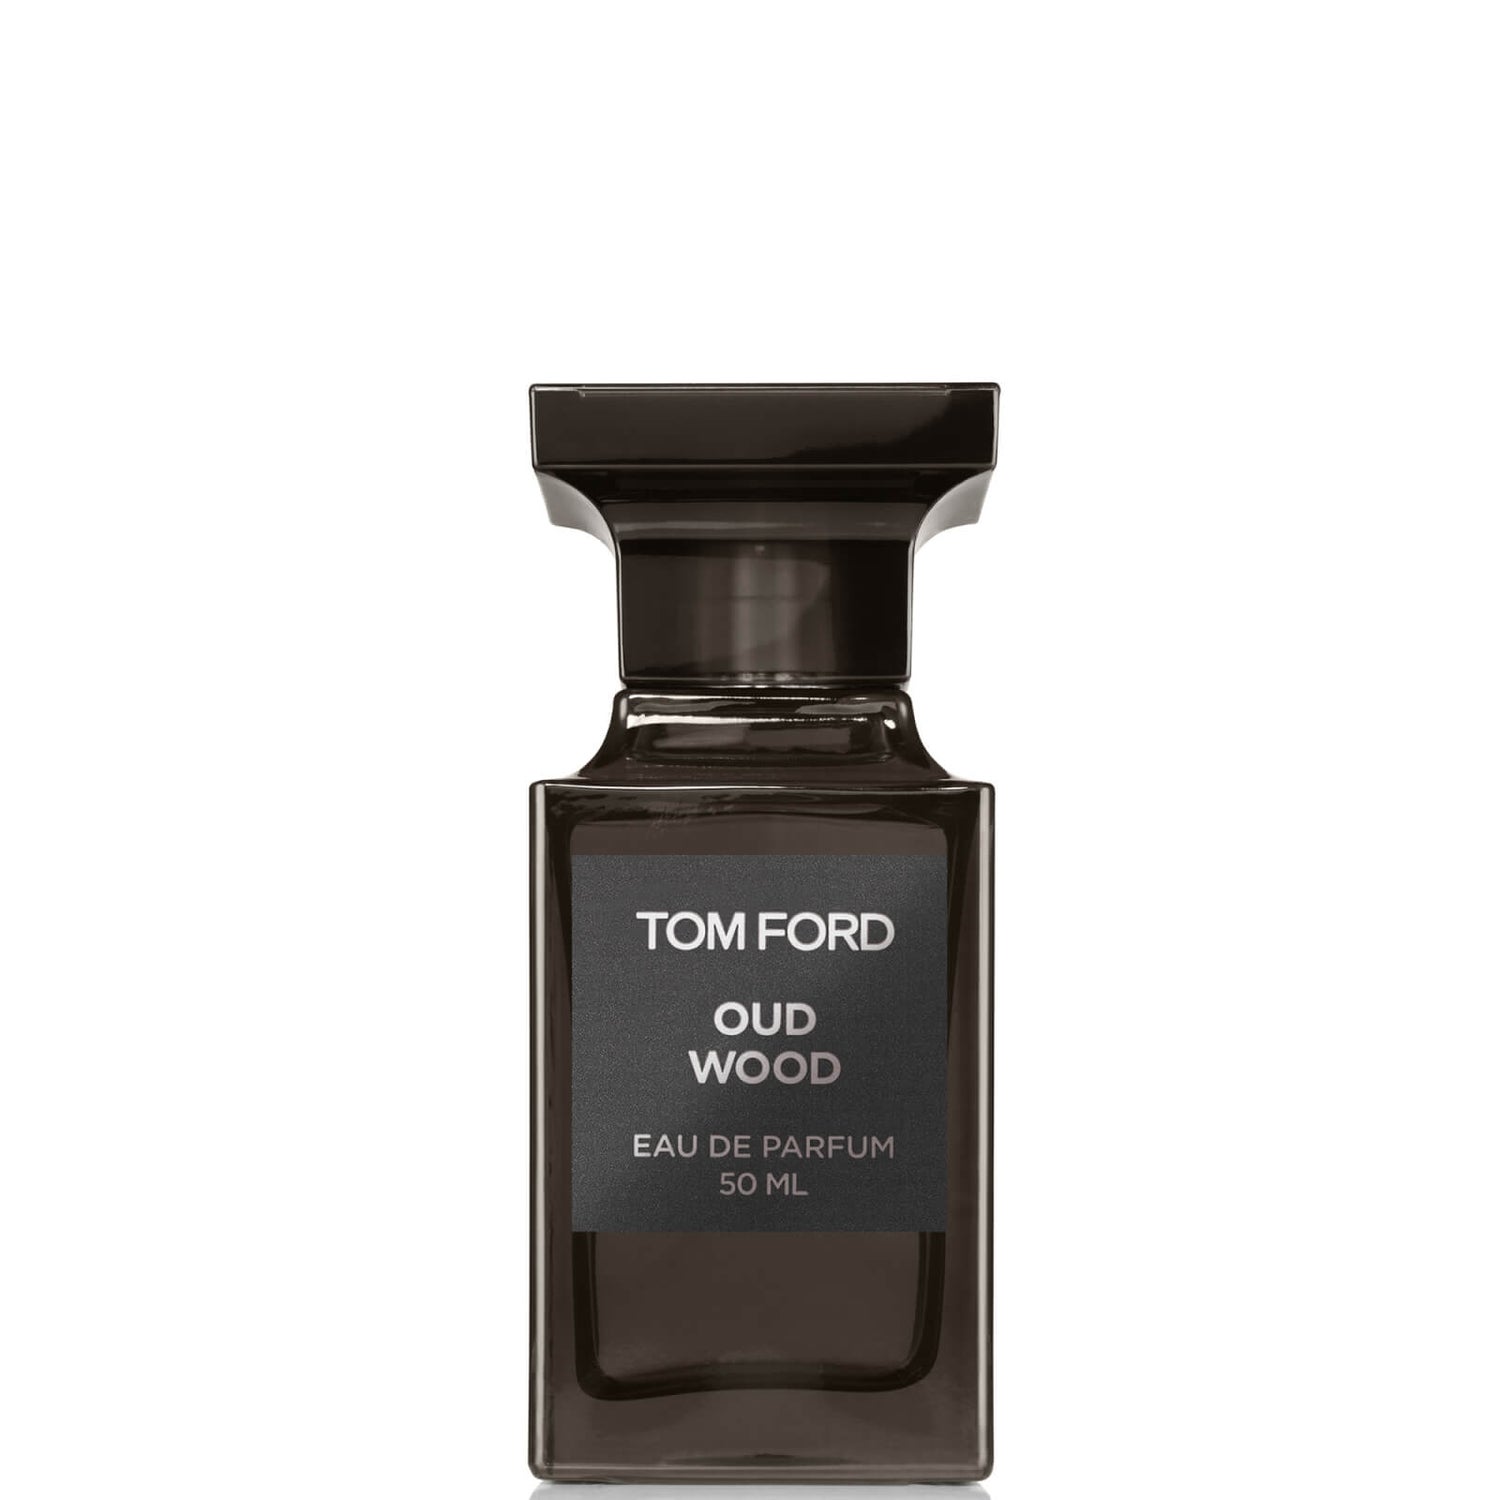 Tom Ford Oud Wood Eau de Parfum Spray - 50ml Tom Ford Oud Wood parfémovaná voda ve spreji - 50 ml